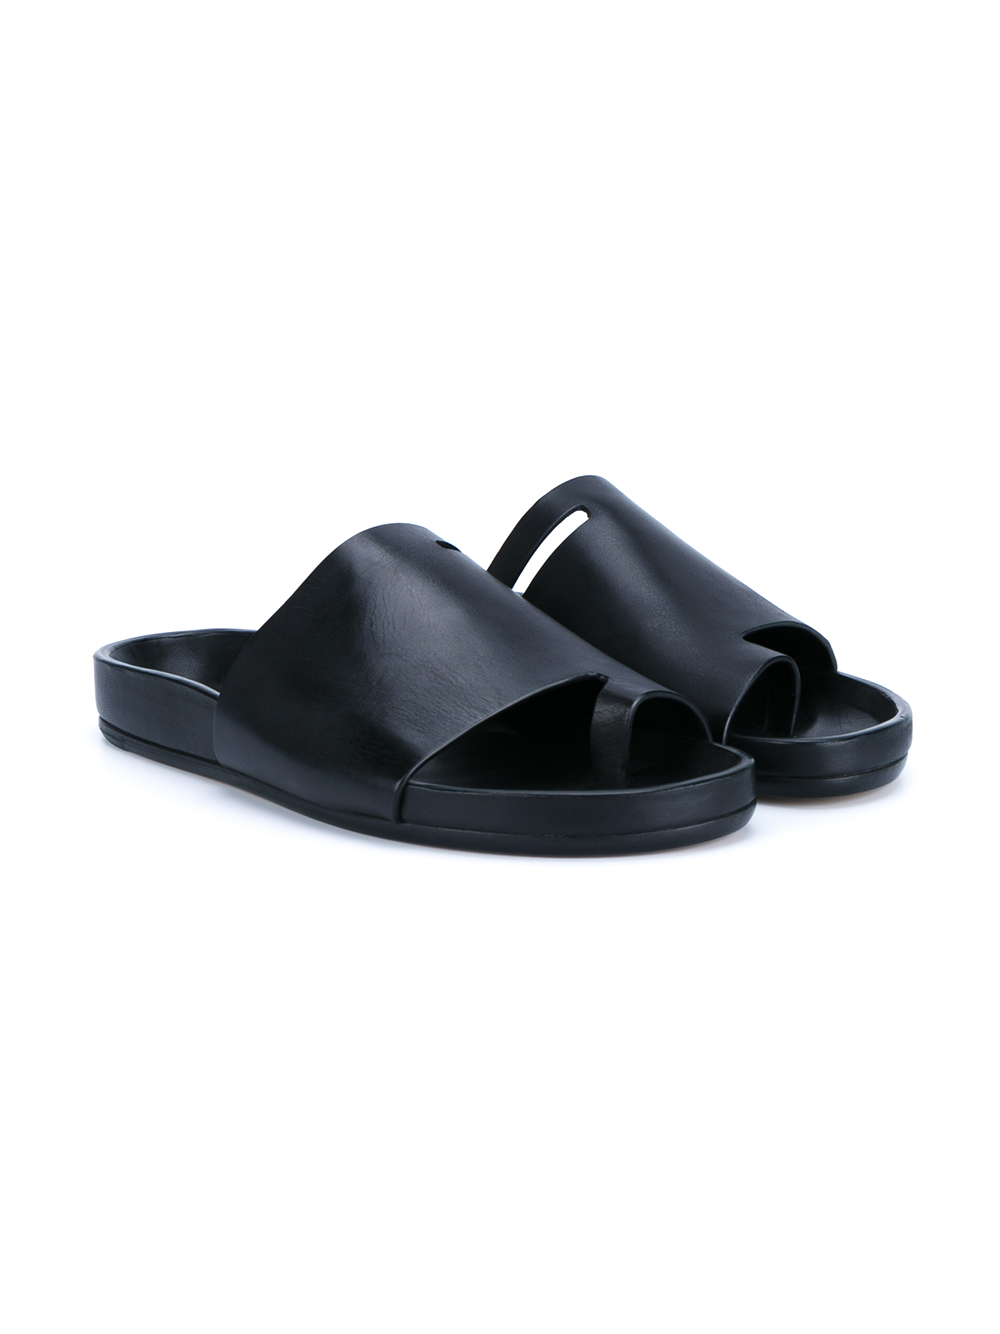 Lyst - Rick owens Granola Leather Sandals in Black for Men